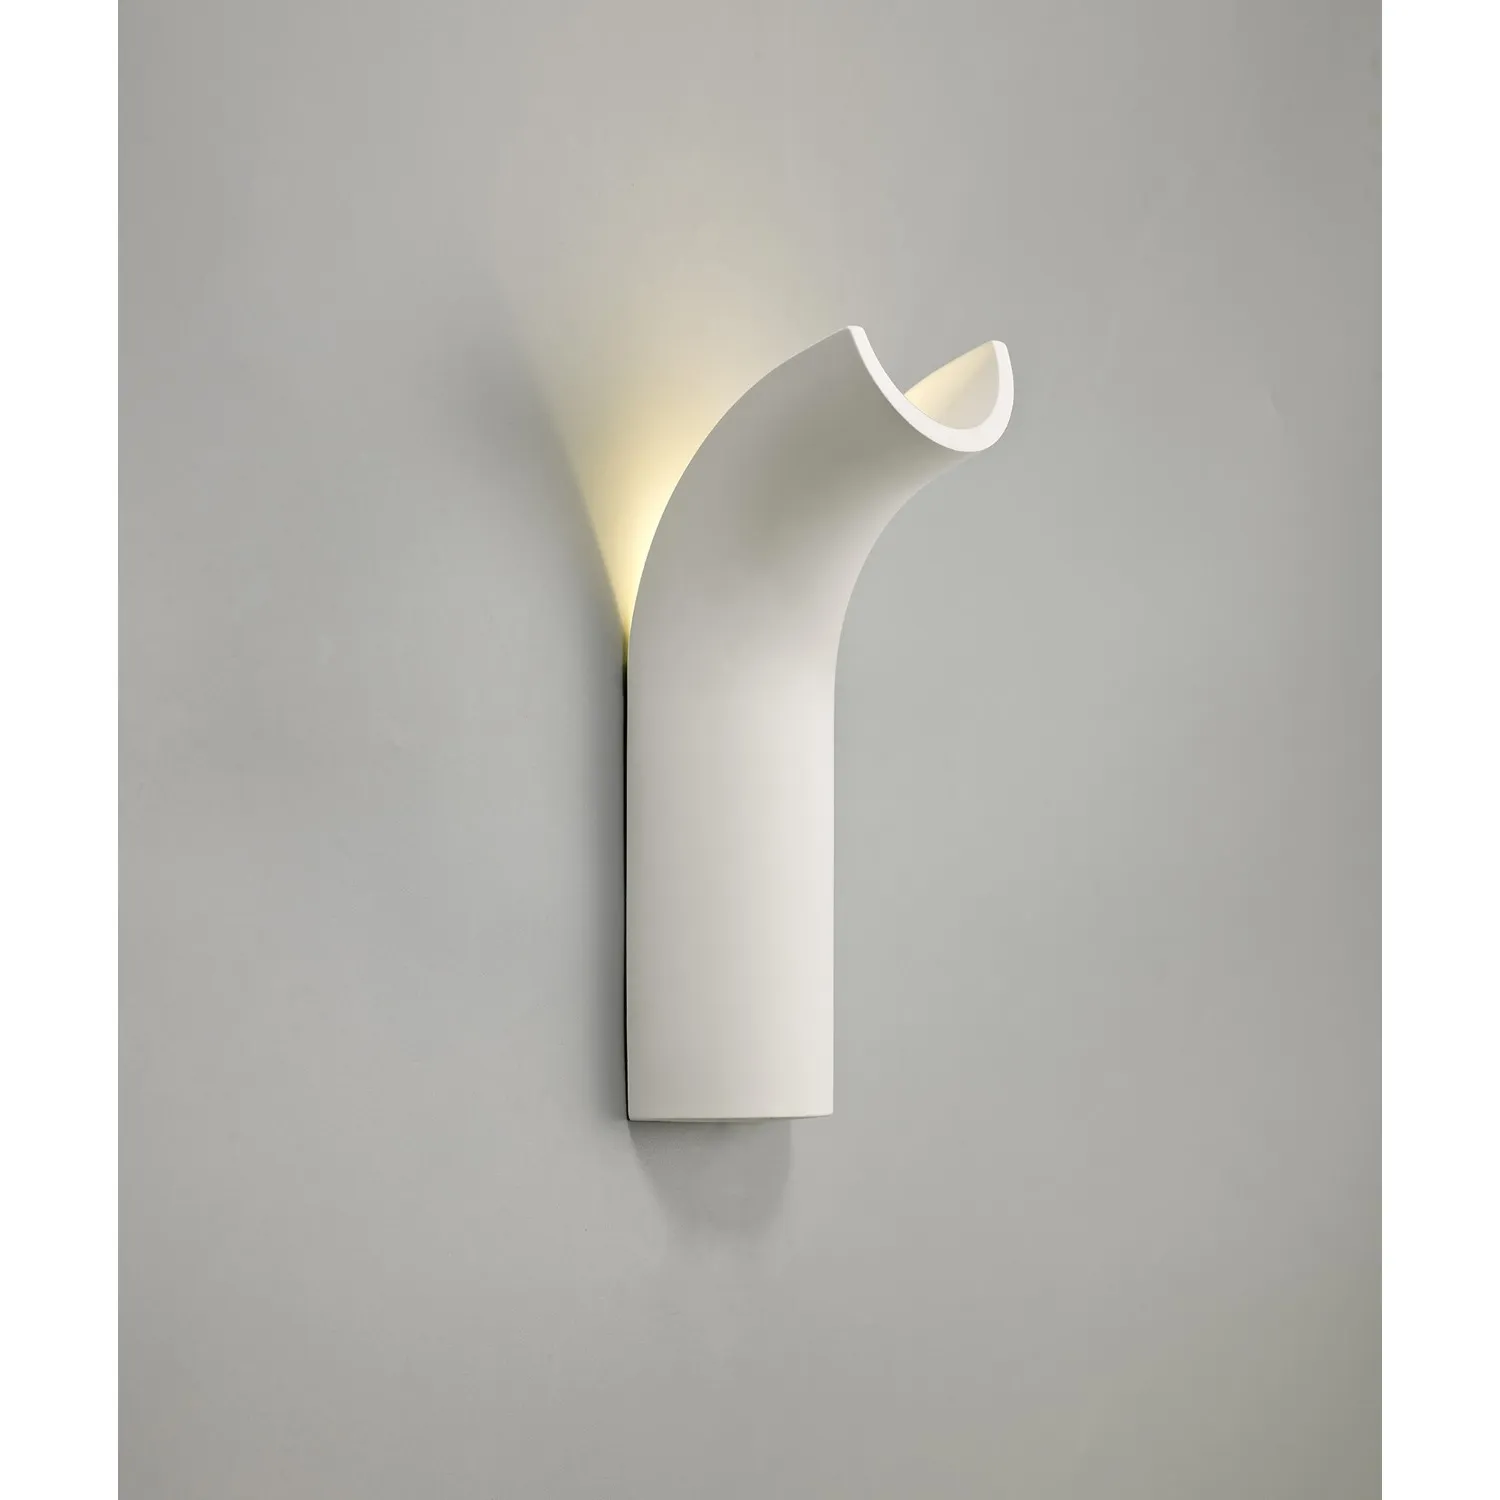 Tilbury Uplighter Wall Lamp, 1 x 4.5W LED, 3000K, 275lm, White Paintable Gypsum, 3yrs Warranty